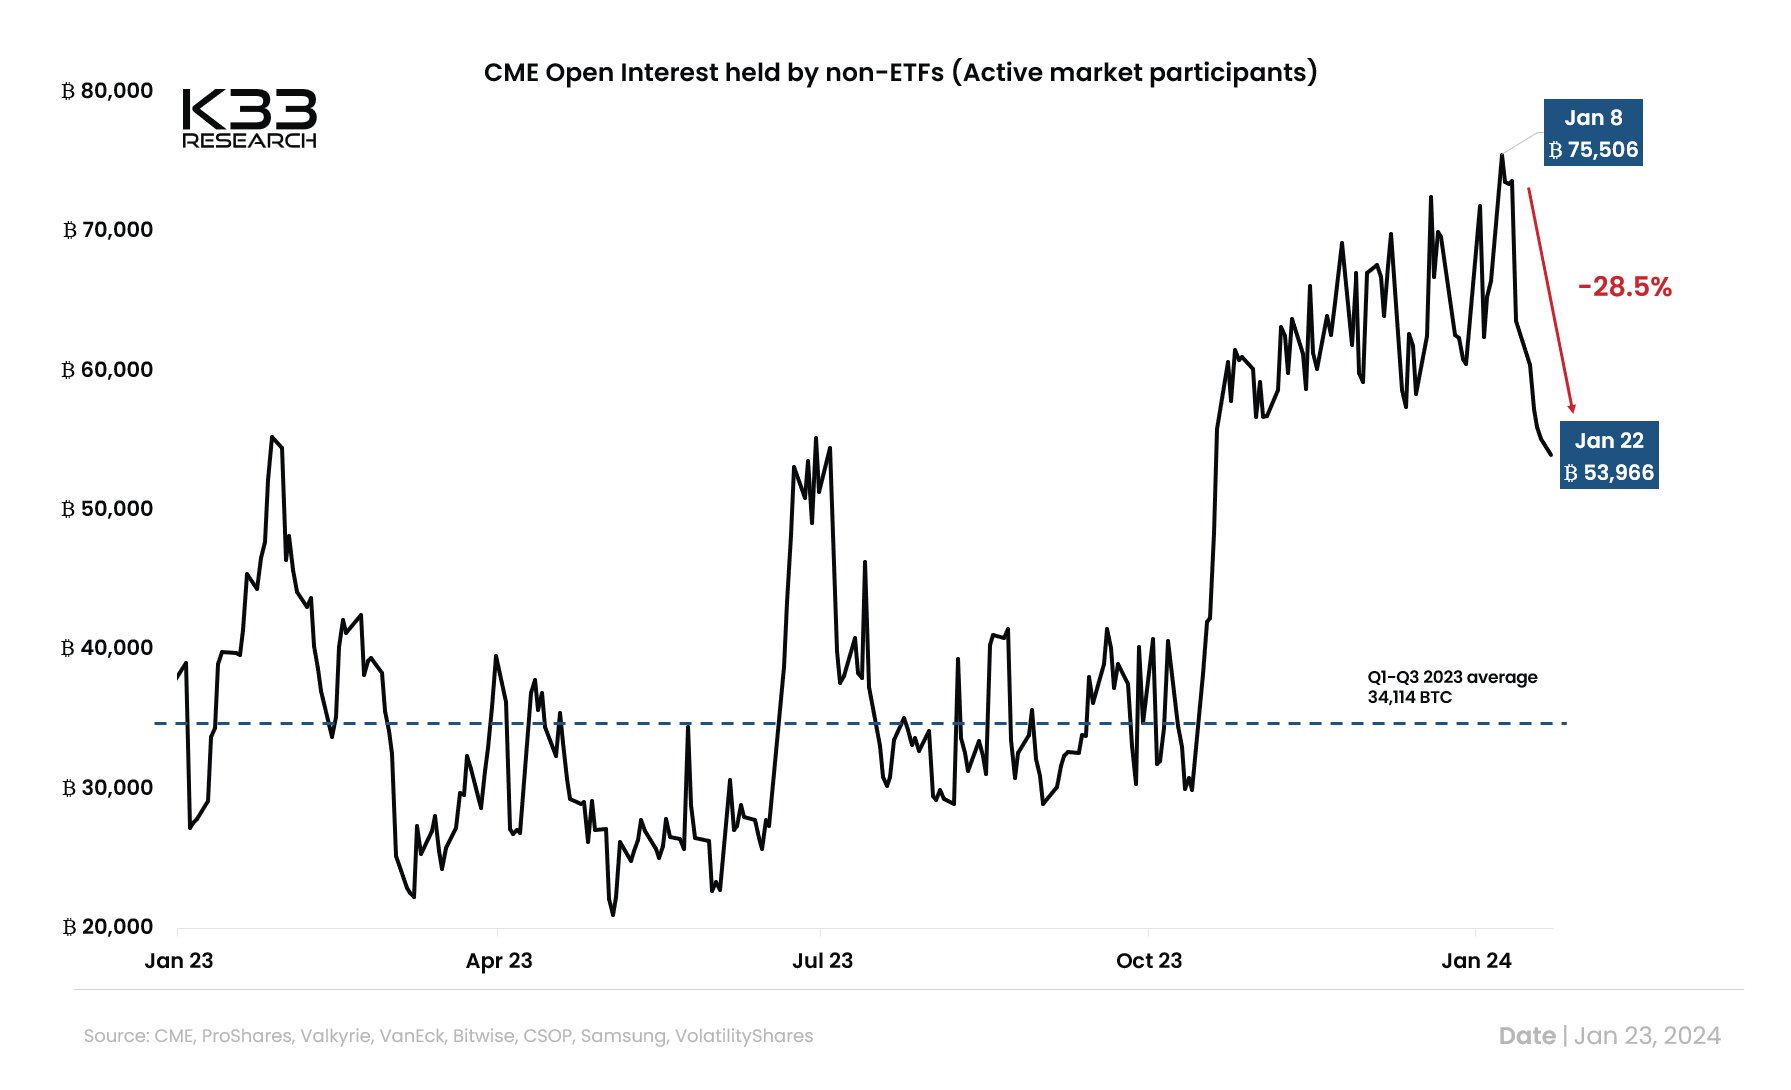 CME Open Interest by non-ETFs: (Source: K33 Research, Vetle Lunde)